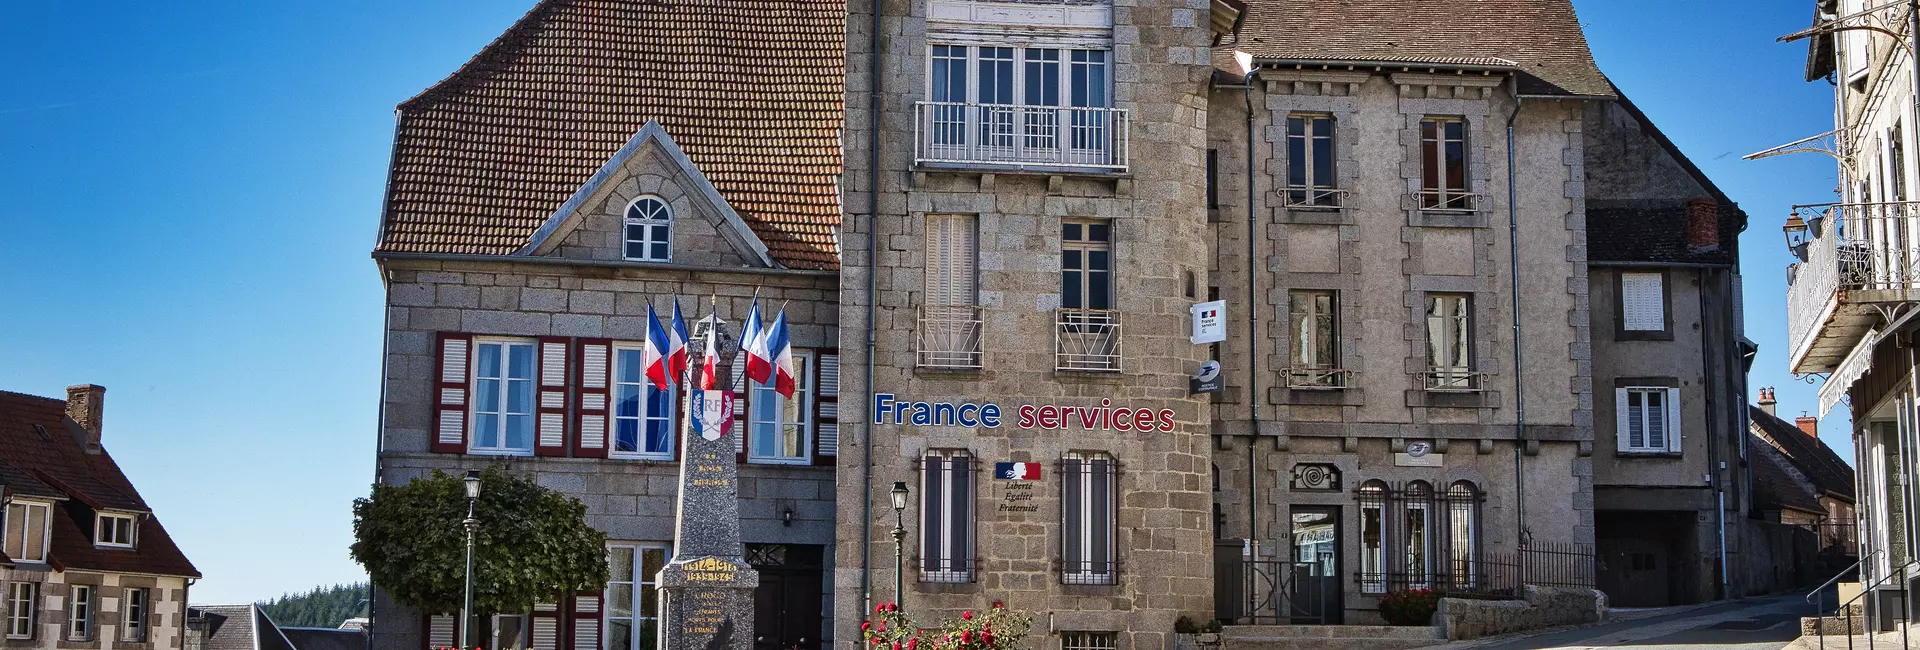 Agence Postale / Maison France Services